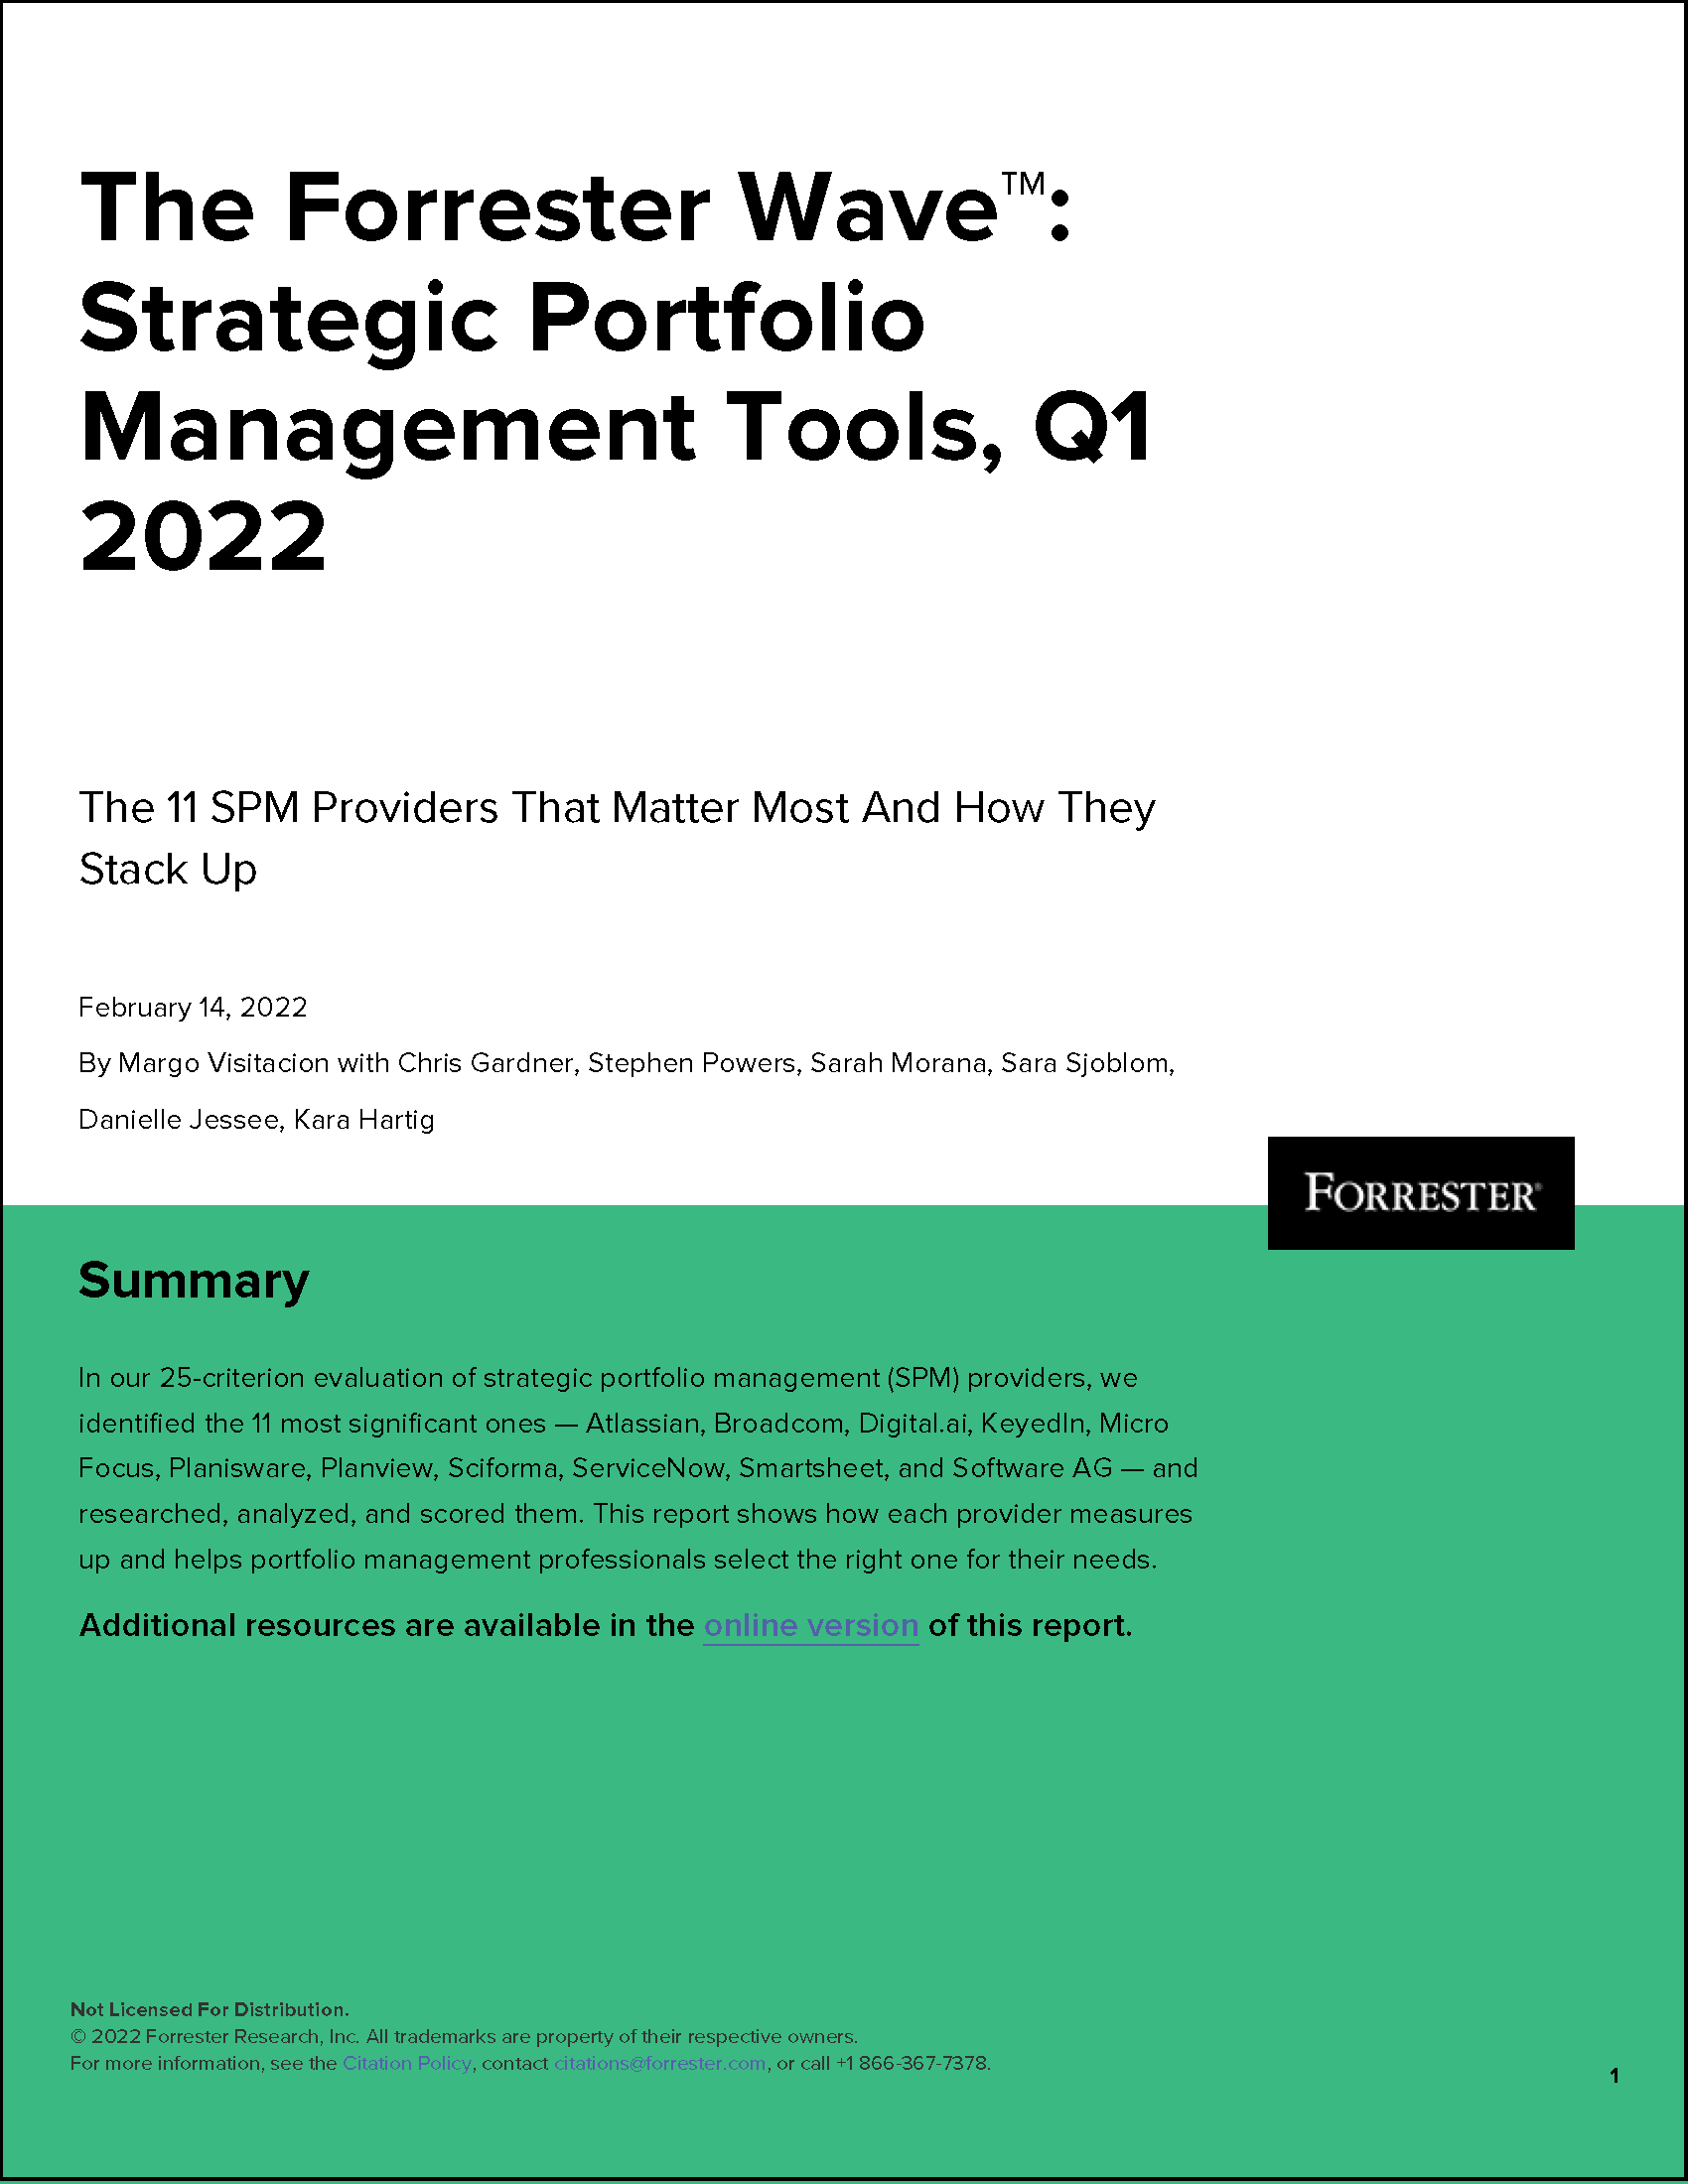 The Forrester Wave™: Strategic Portfolio Management Tools, Q1 2022